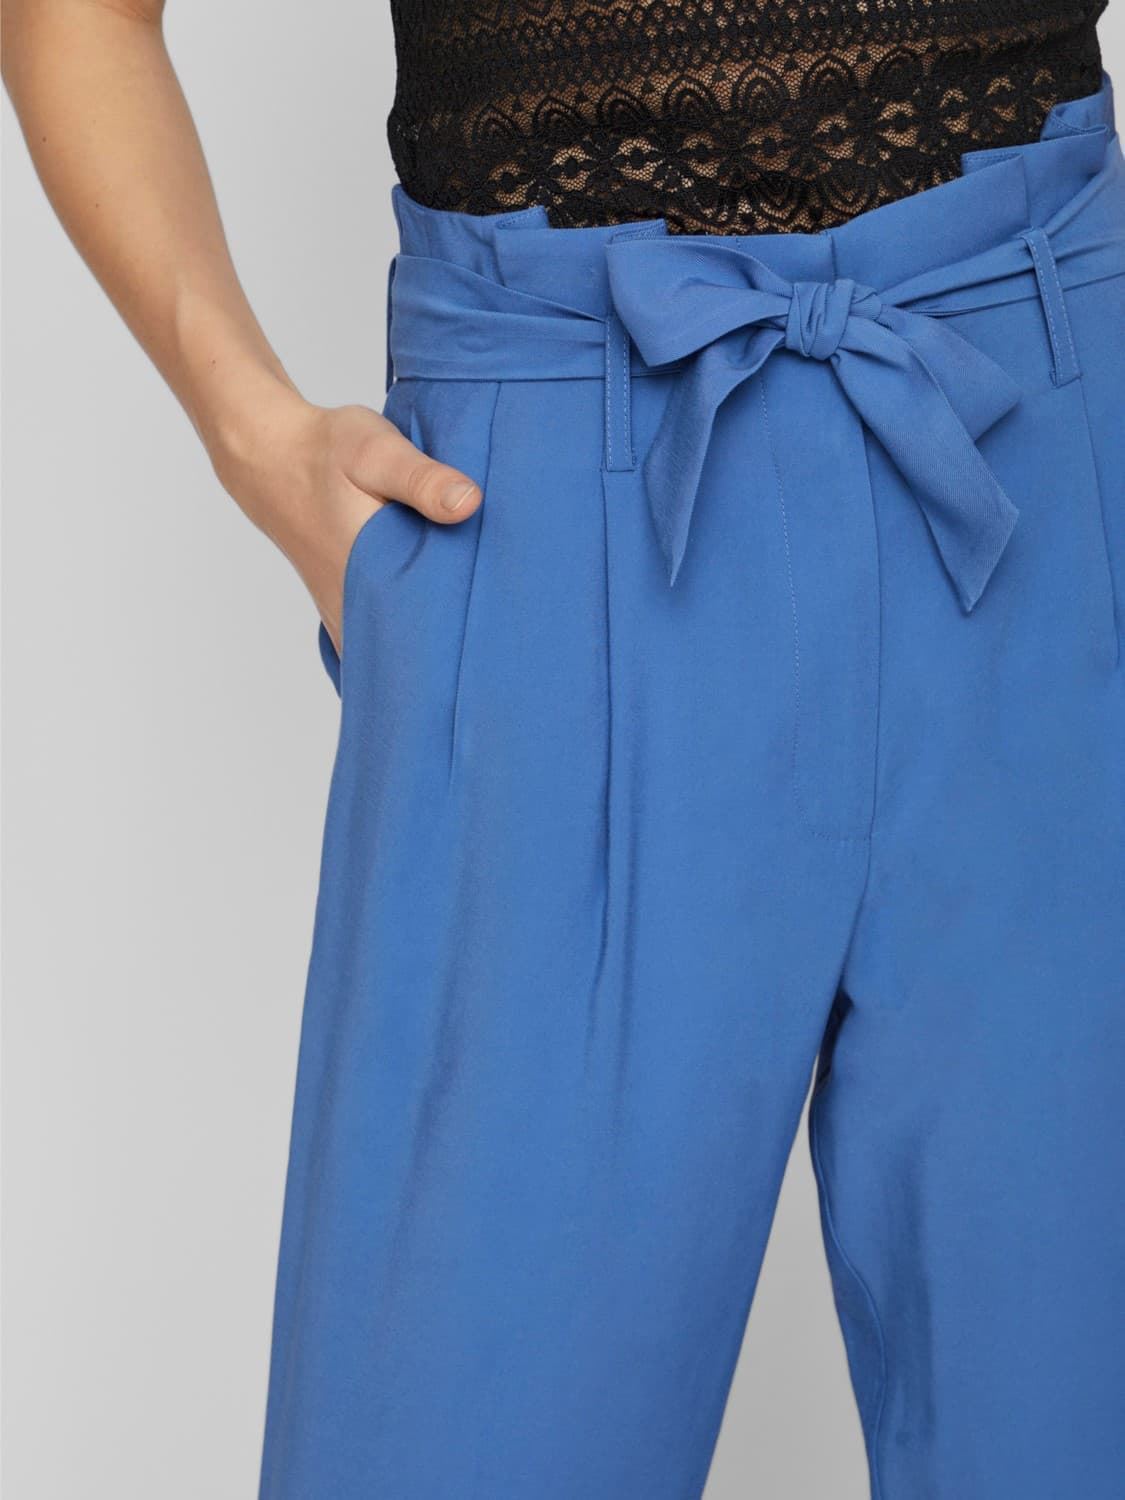 Pantalón azul vikaya - Imagen 6